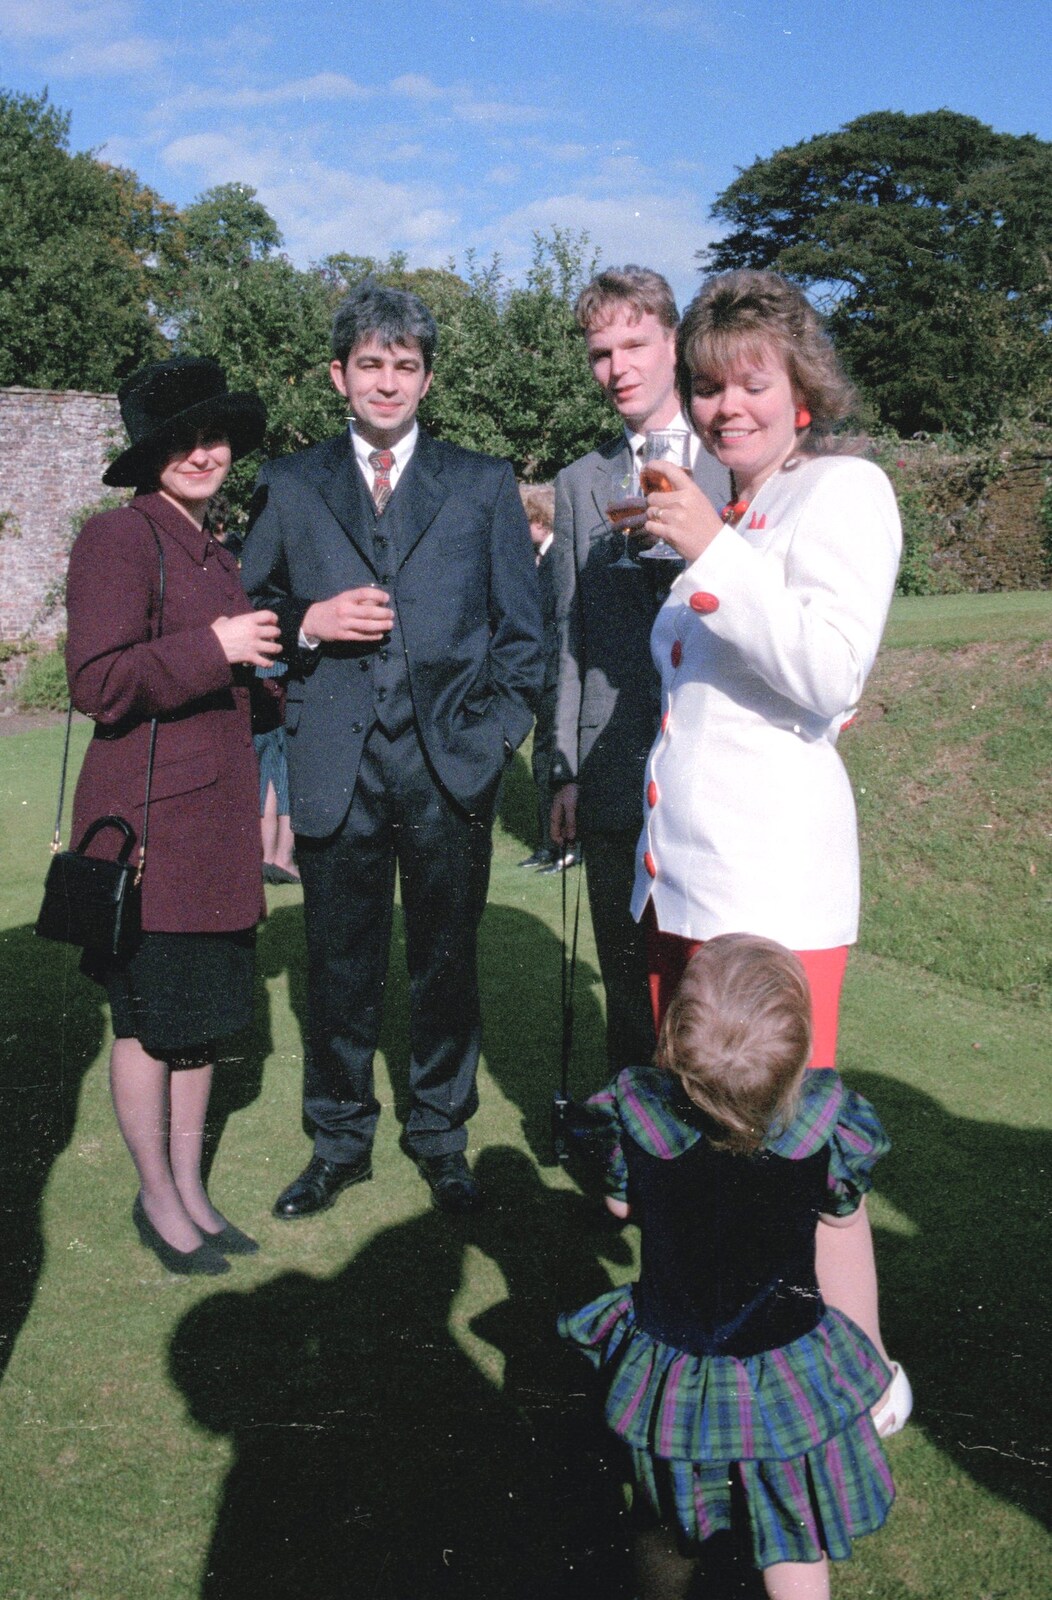 Stuart and Sarah's CISU Wedding, Naworth Castle, Brampton, Cumbria - 21st September 1996: Neil, Joe and Sheila